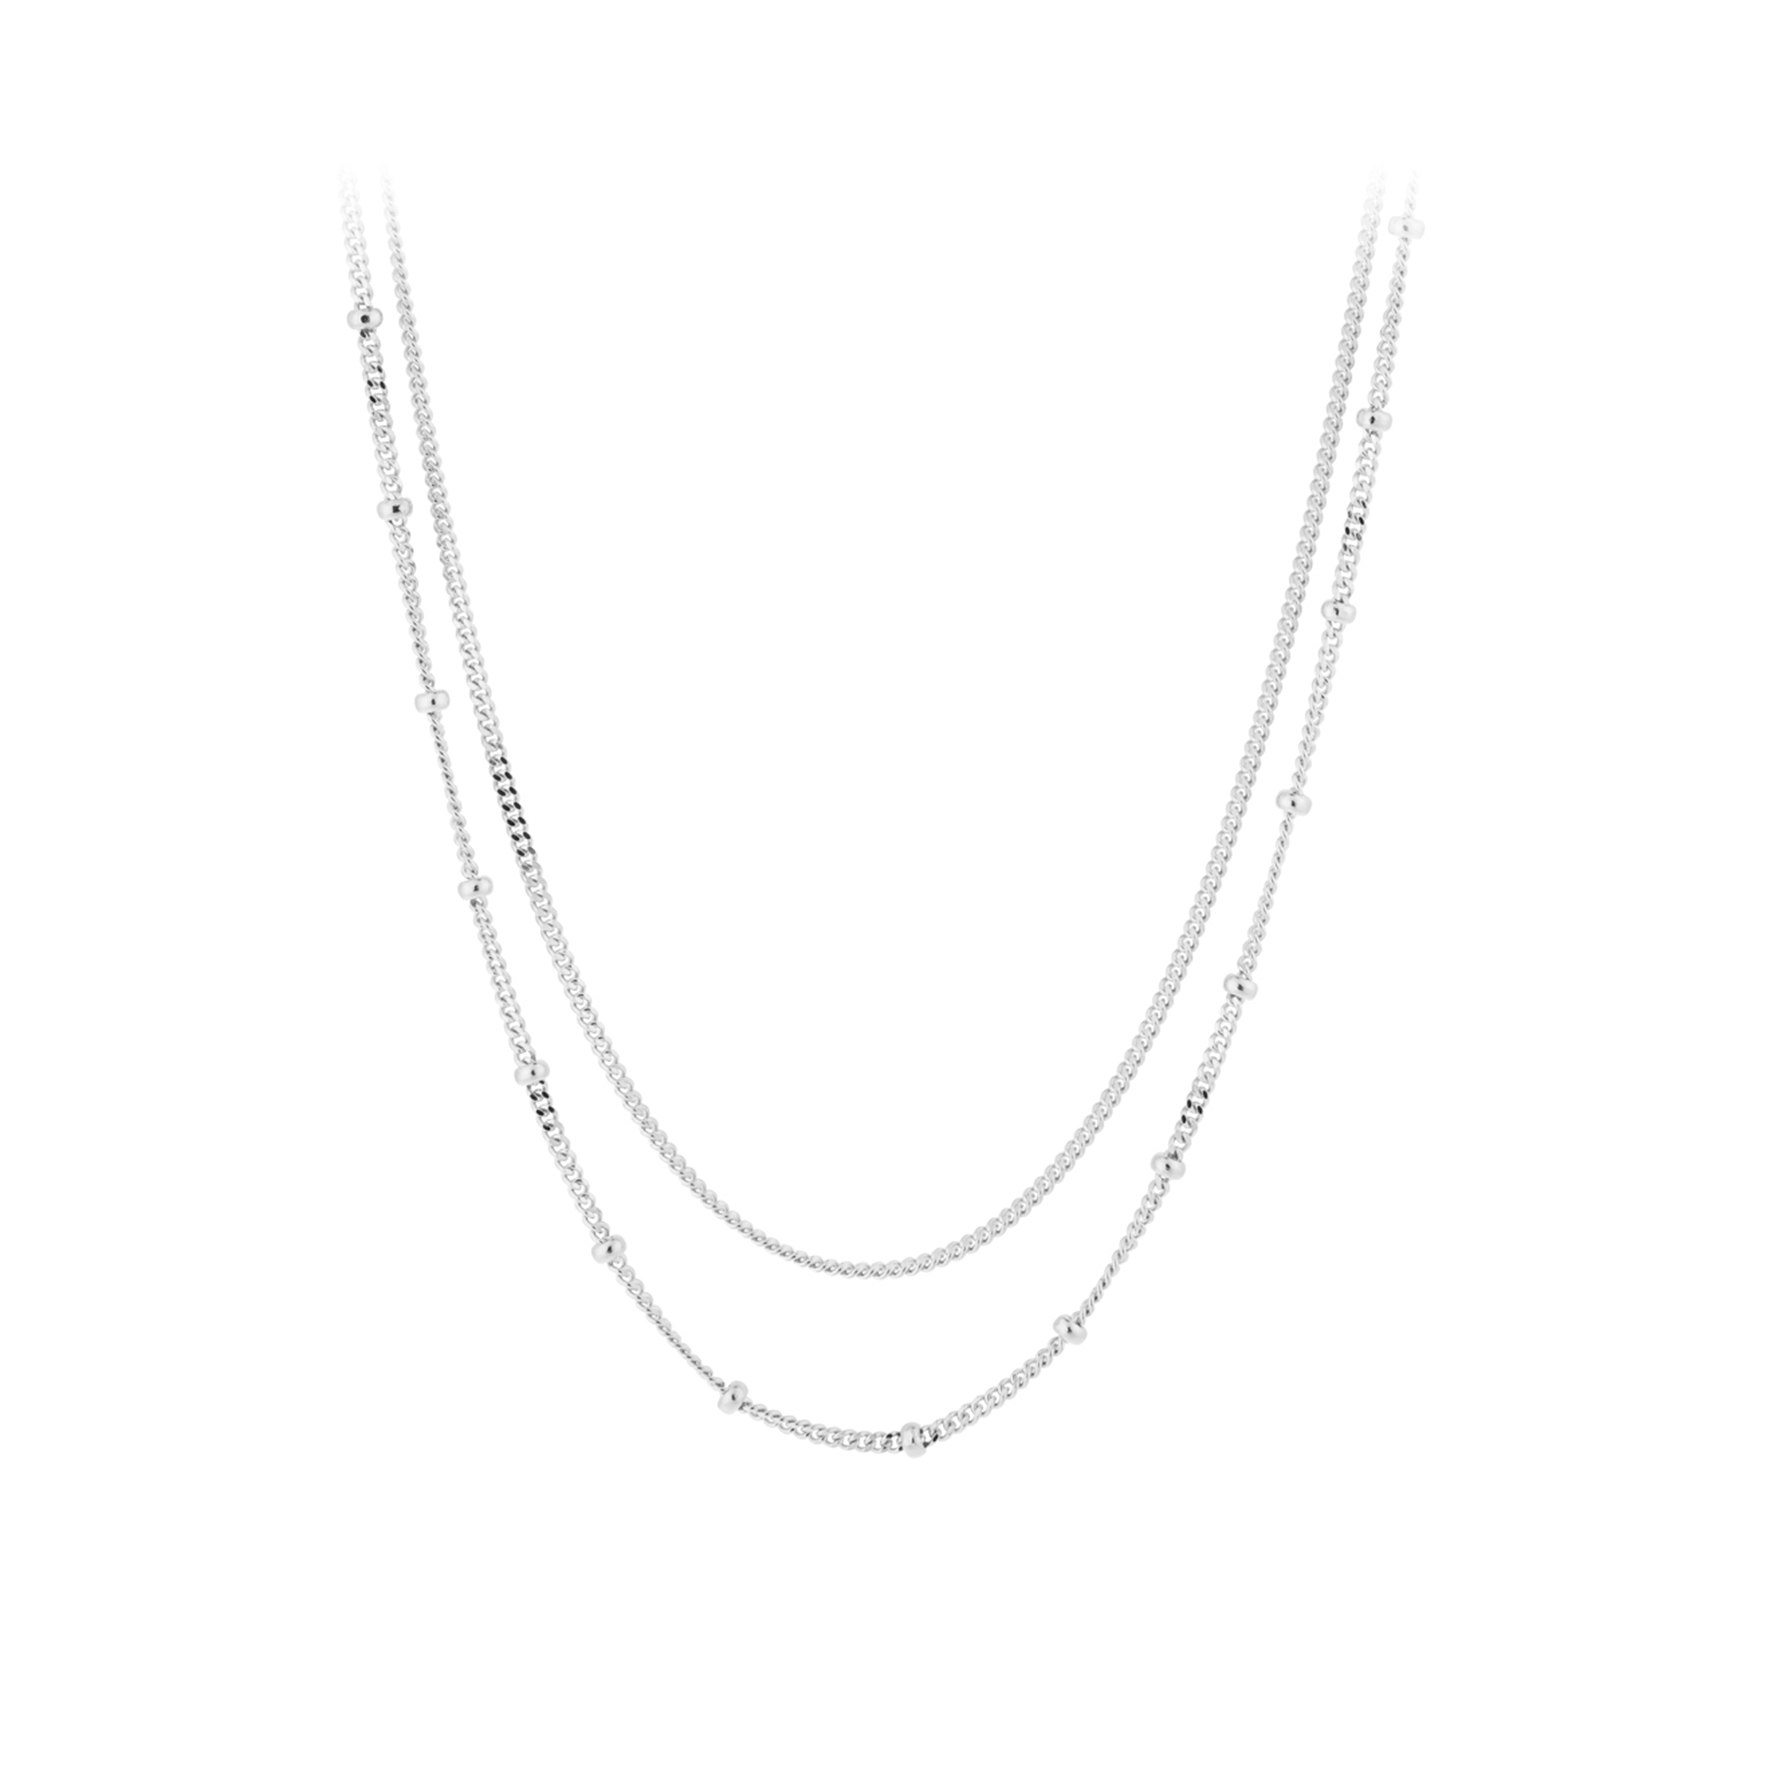 Galaxy Necklace von Pernille Corydon in Silber Sterling 925